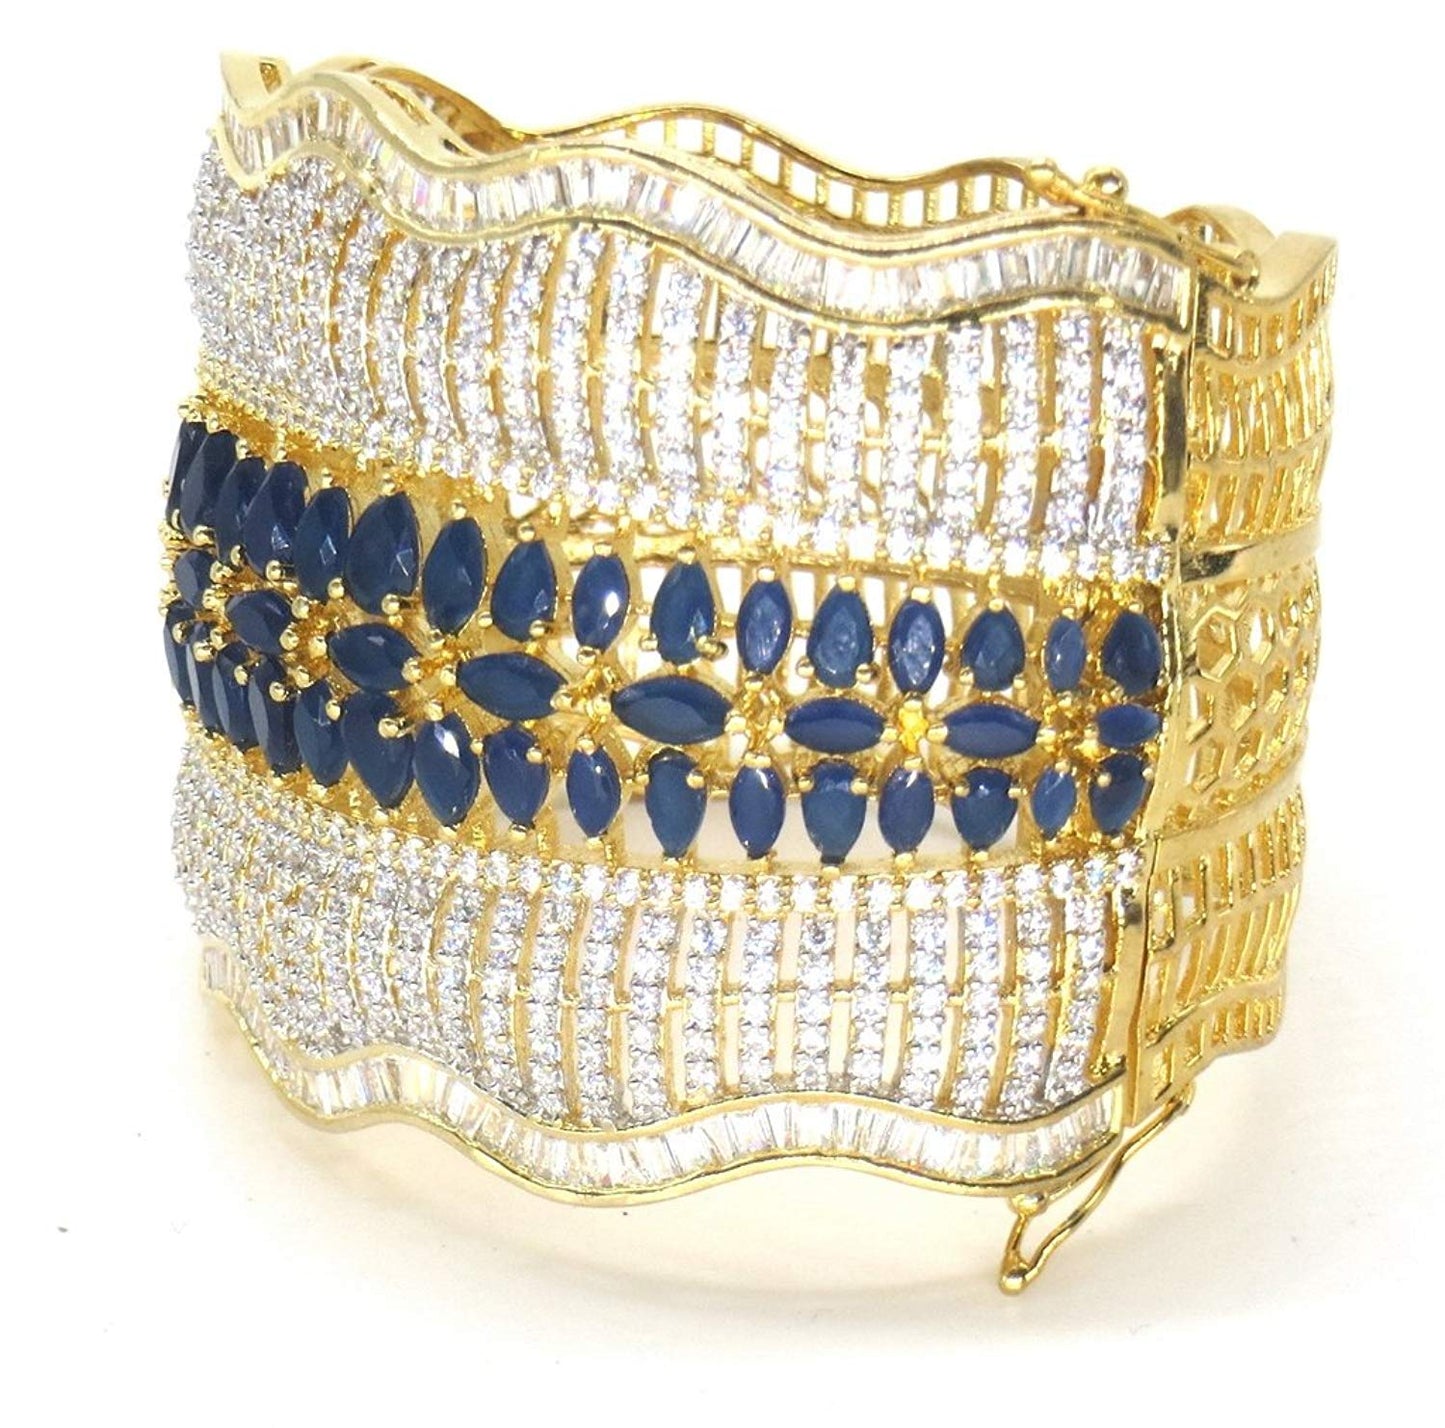 Jewelshingar Jewellery Shingar Jewellery Silver Gold Plated Bracelets for Women (45197-bcad)